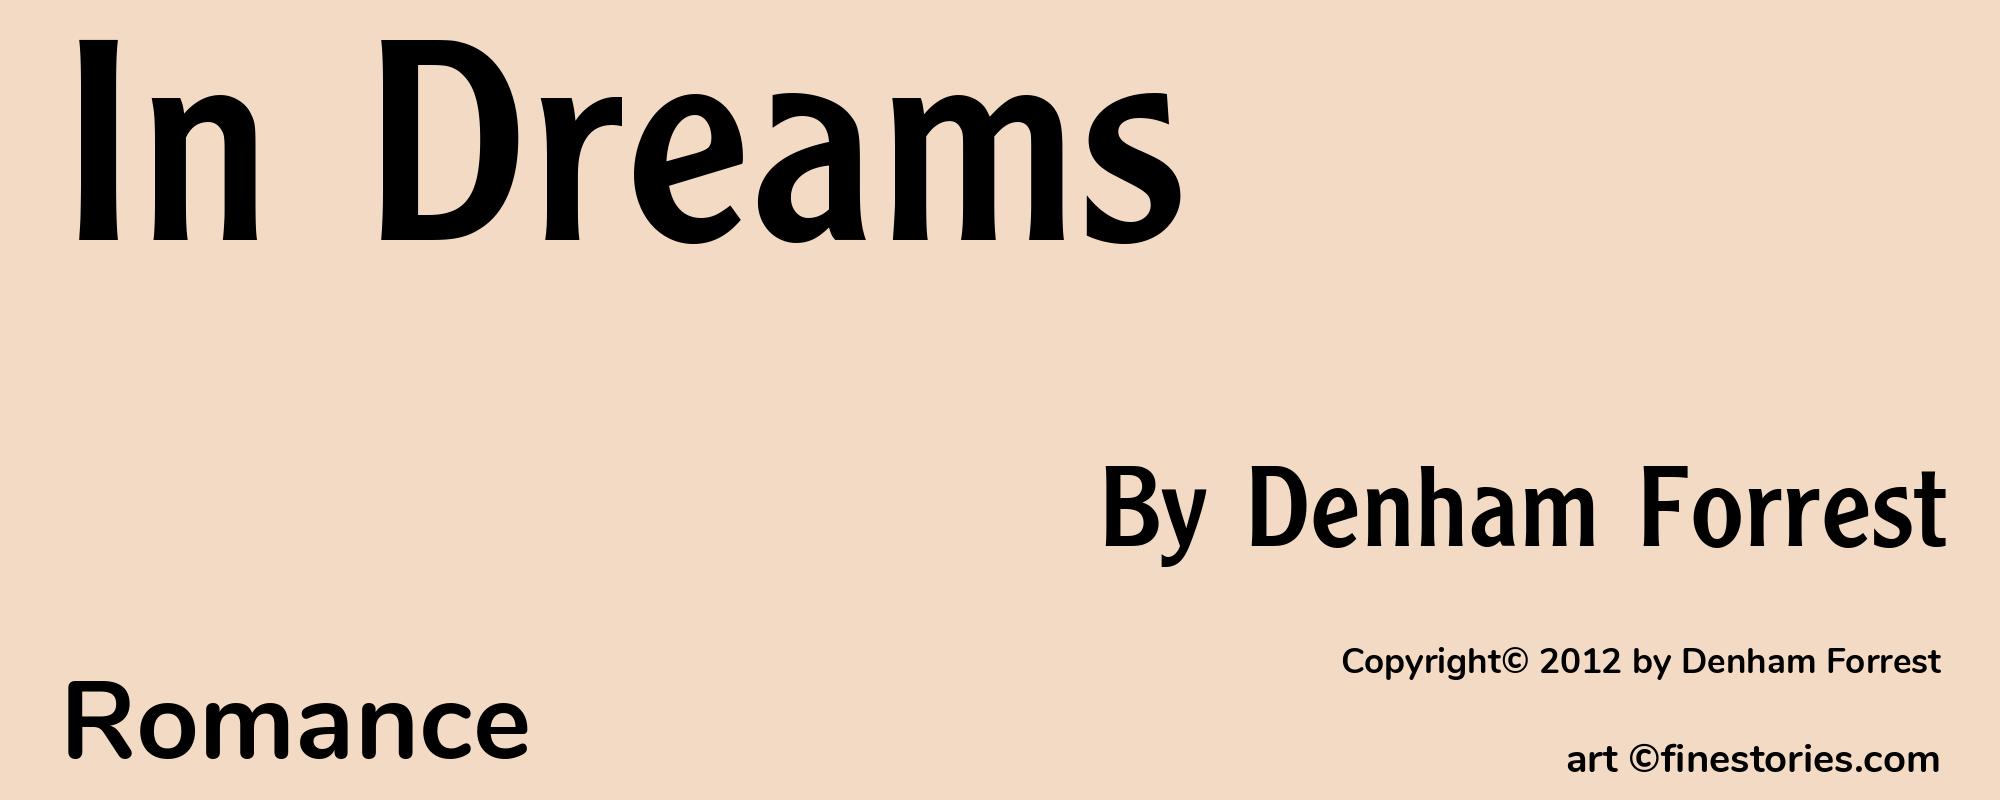 In Dreams - Cover